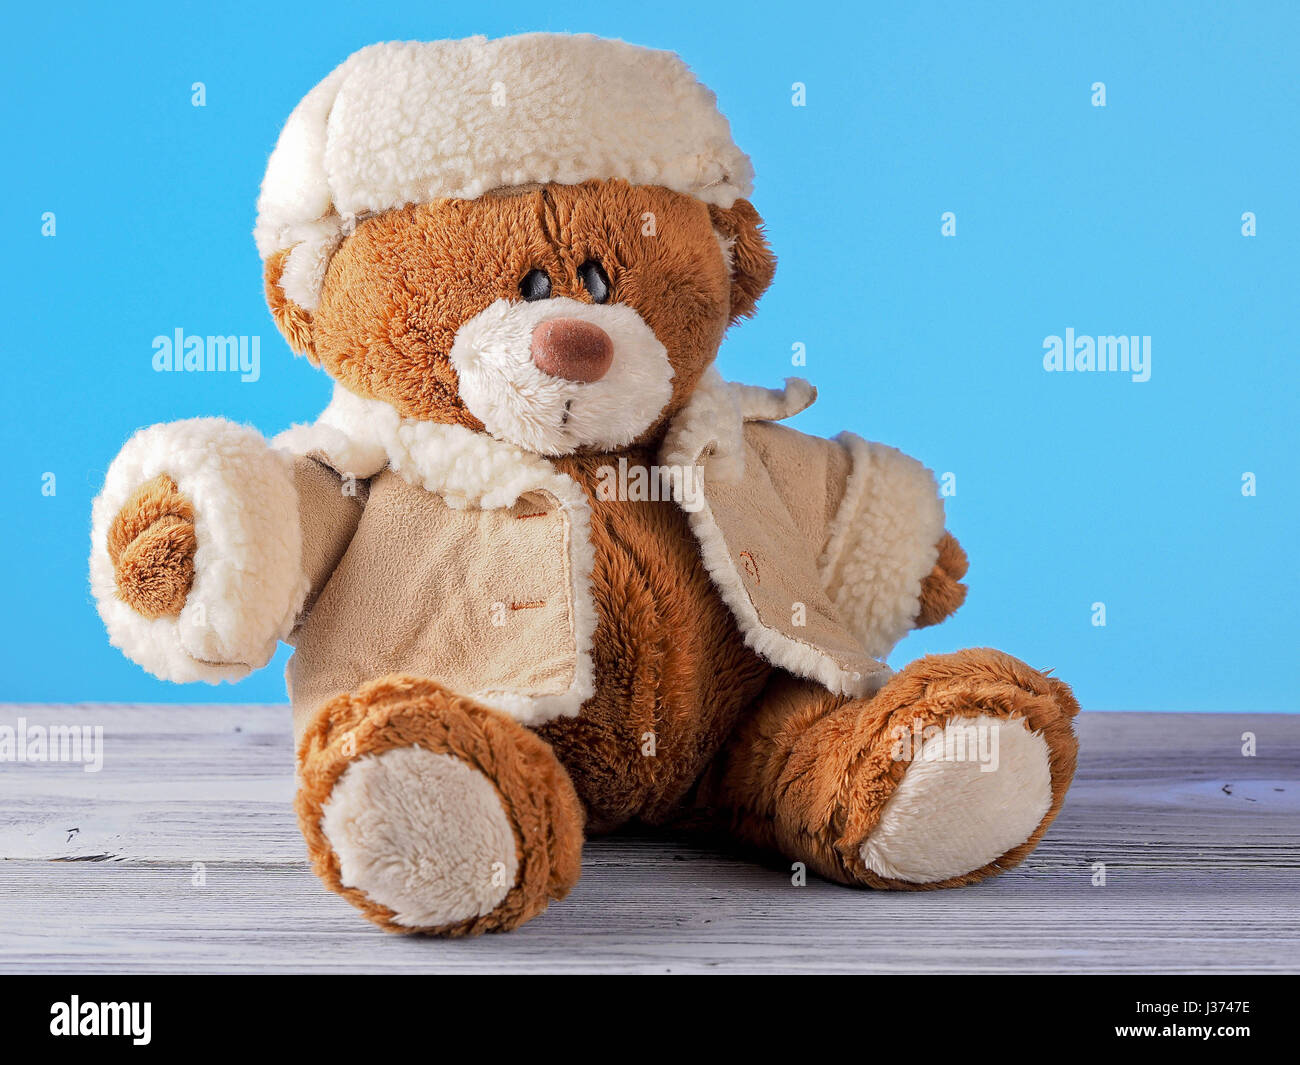 Toy teddy bear Stock Photo